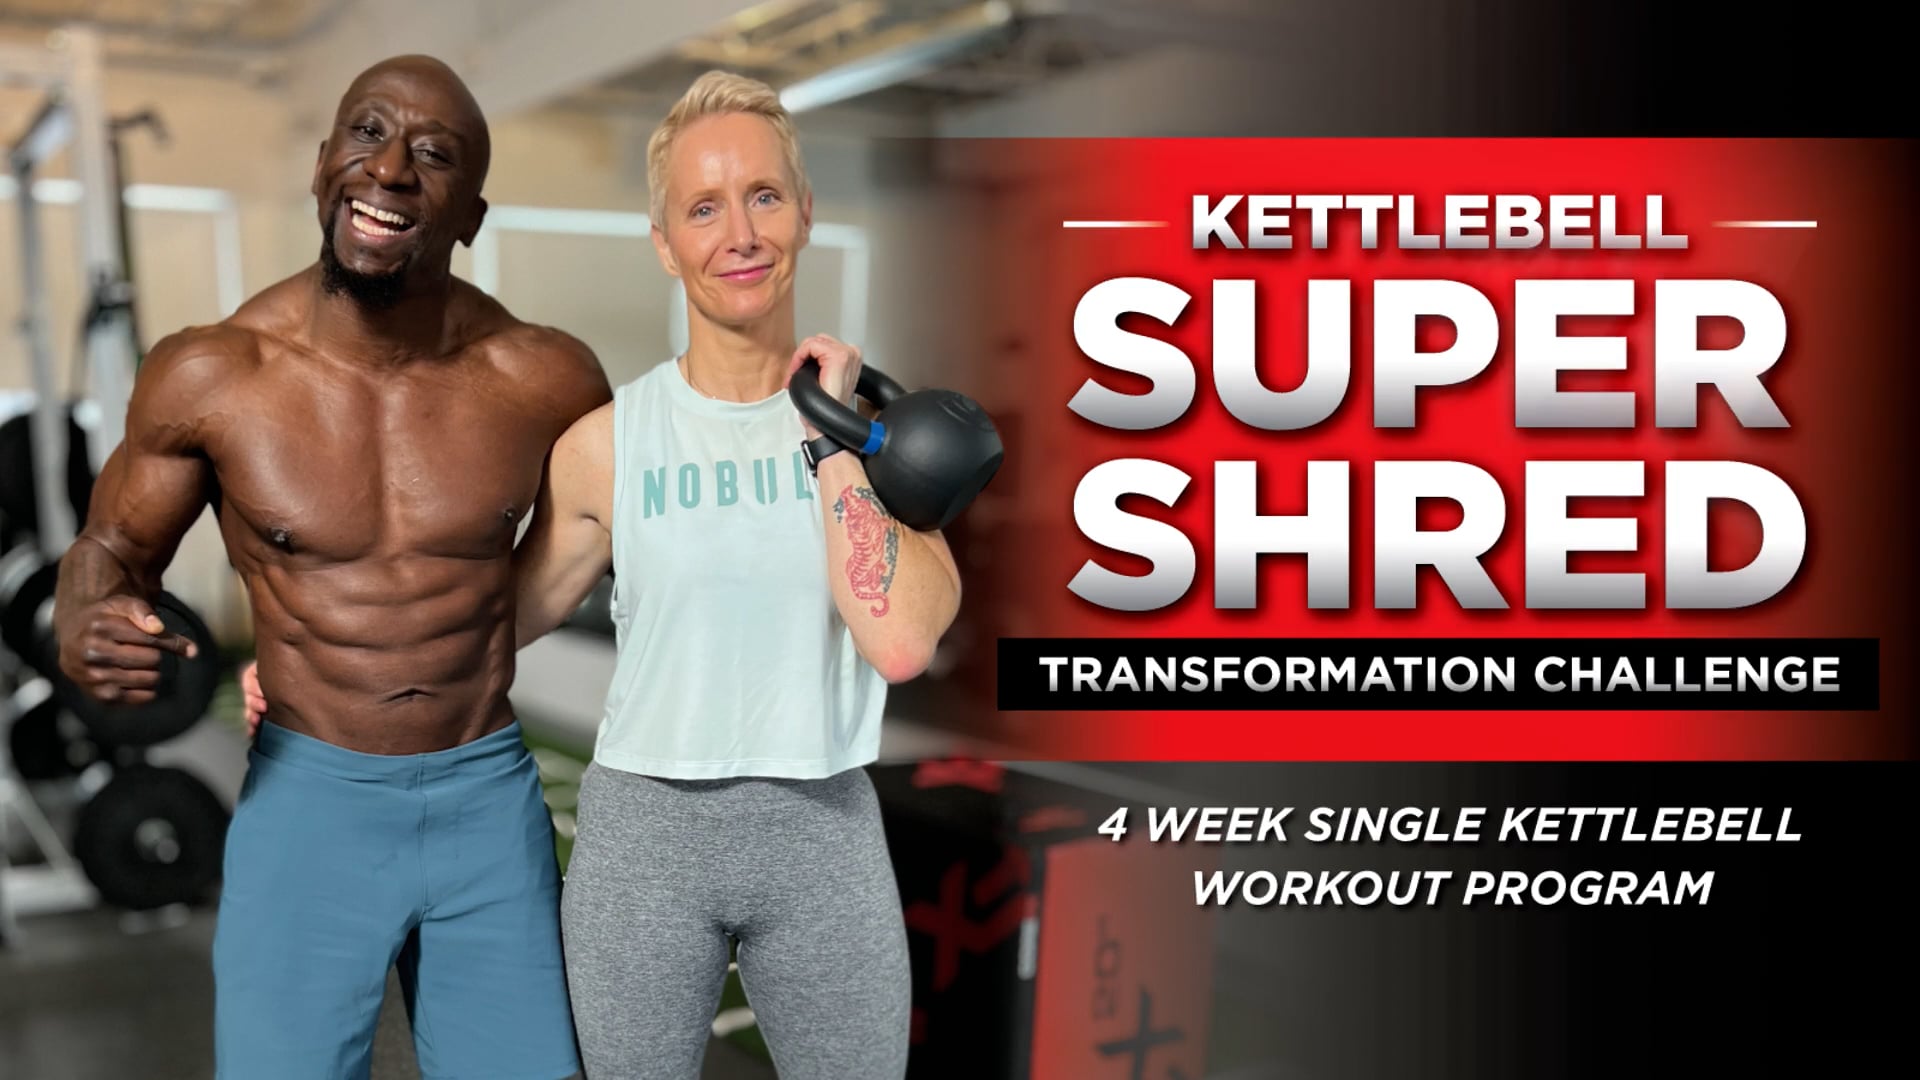 Kettlebell Shred 4 Week Transformation Program on Vimeo